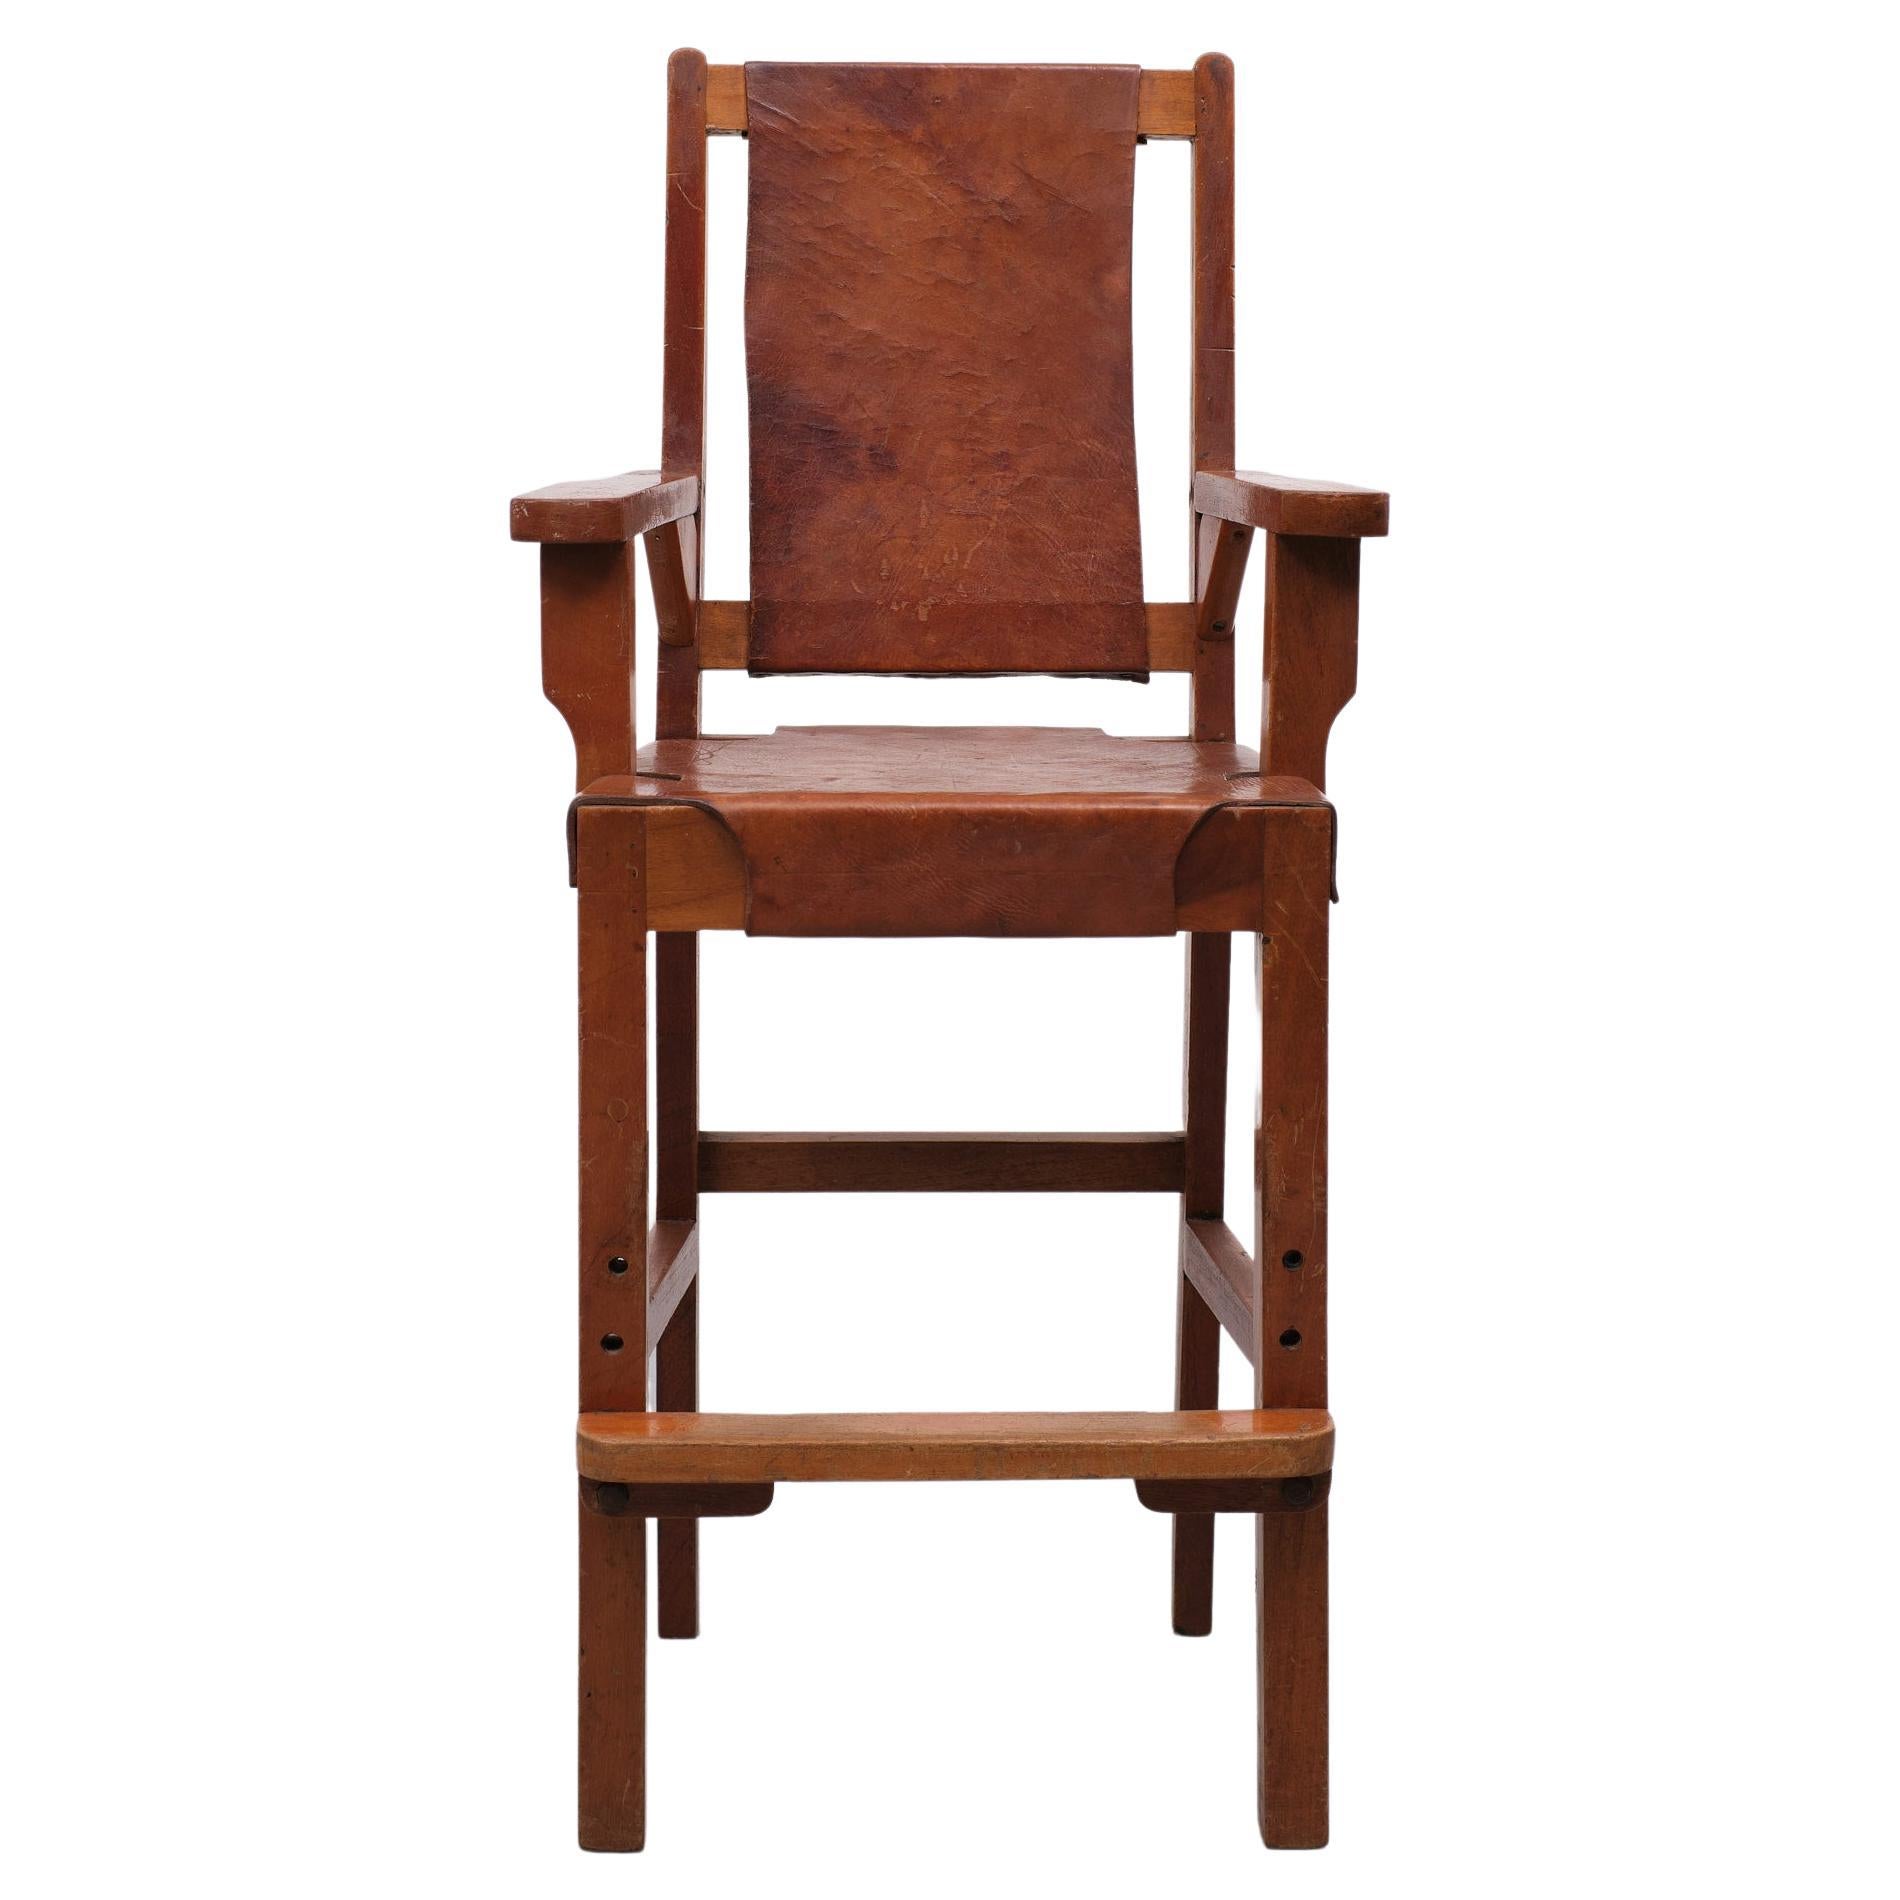 Modernist High Chair Gerrit Rietveld Style 1940s Dutch For Sale